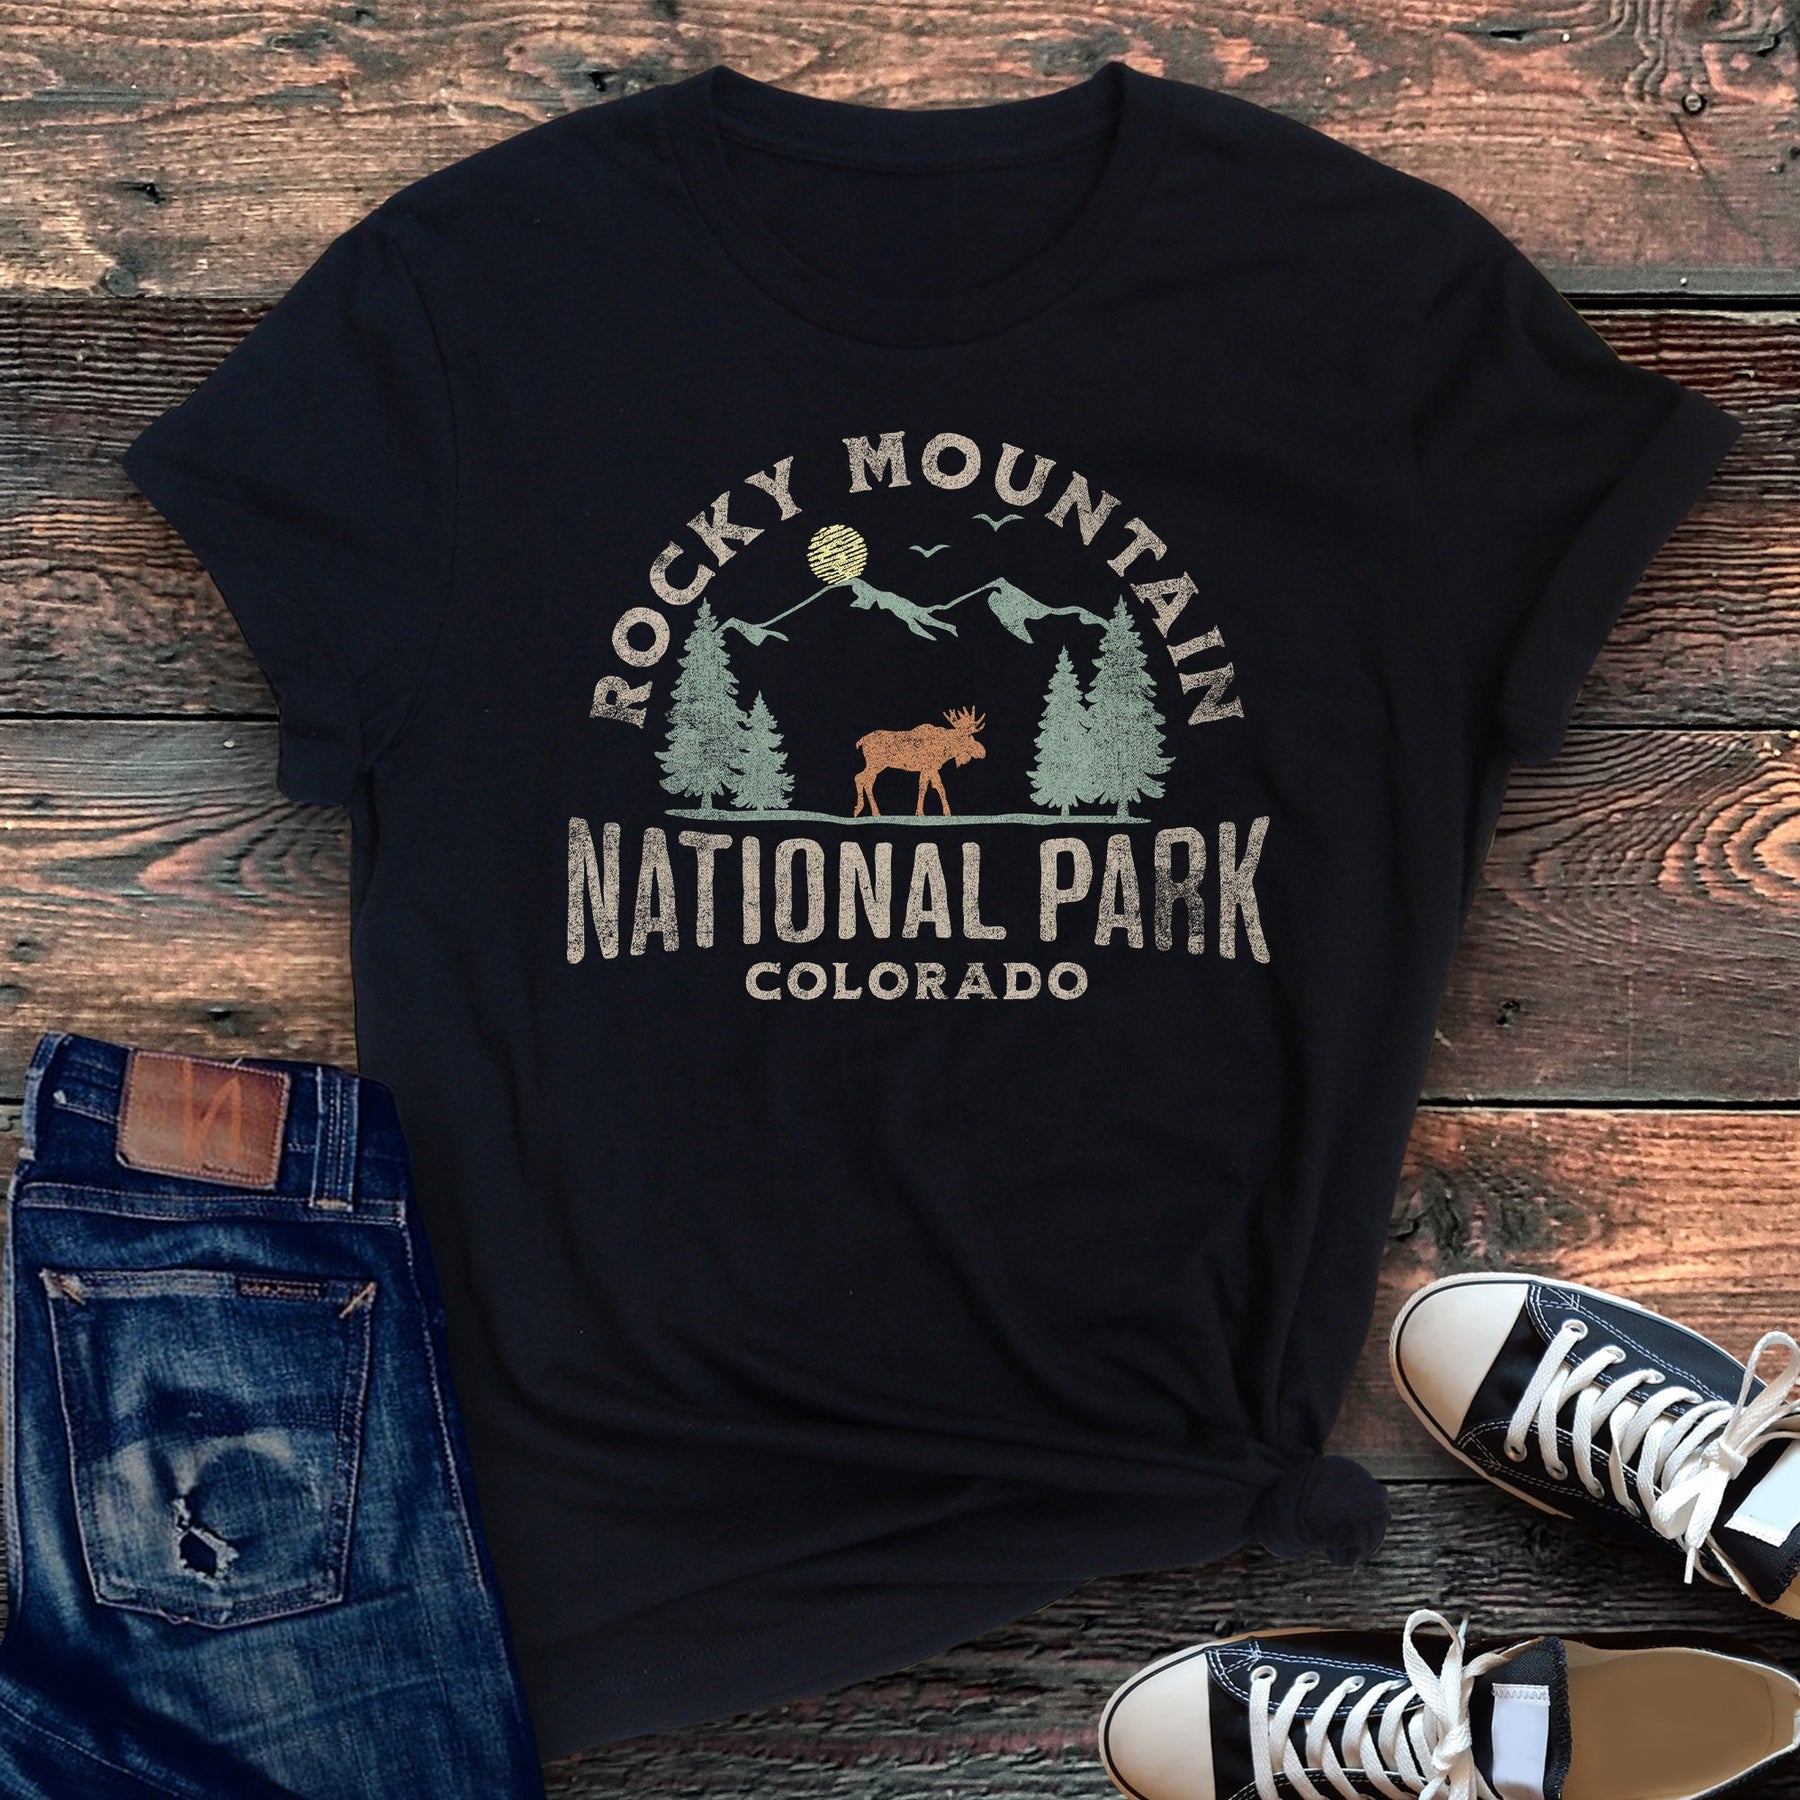 Rocky Mountain National Park Super Soft Tshirt